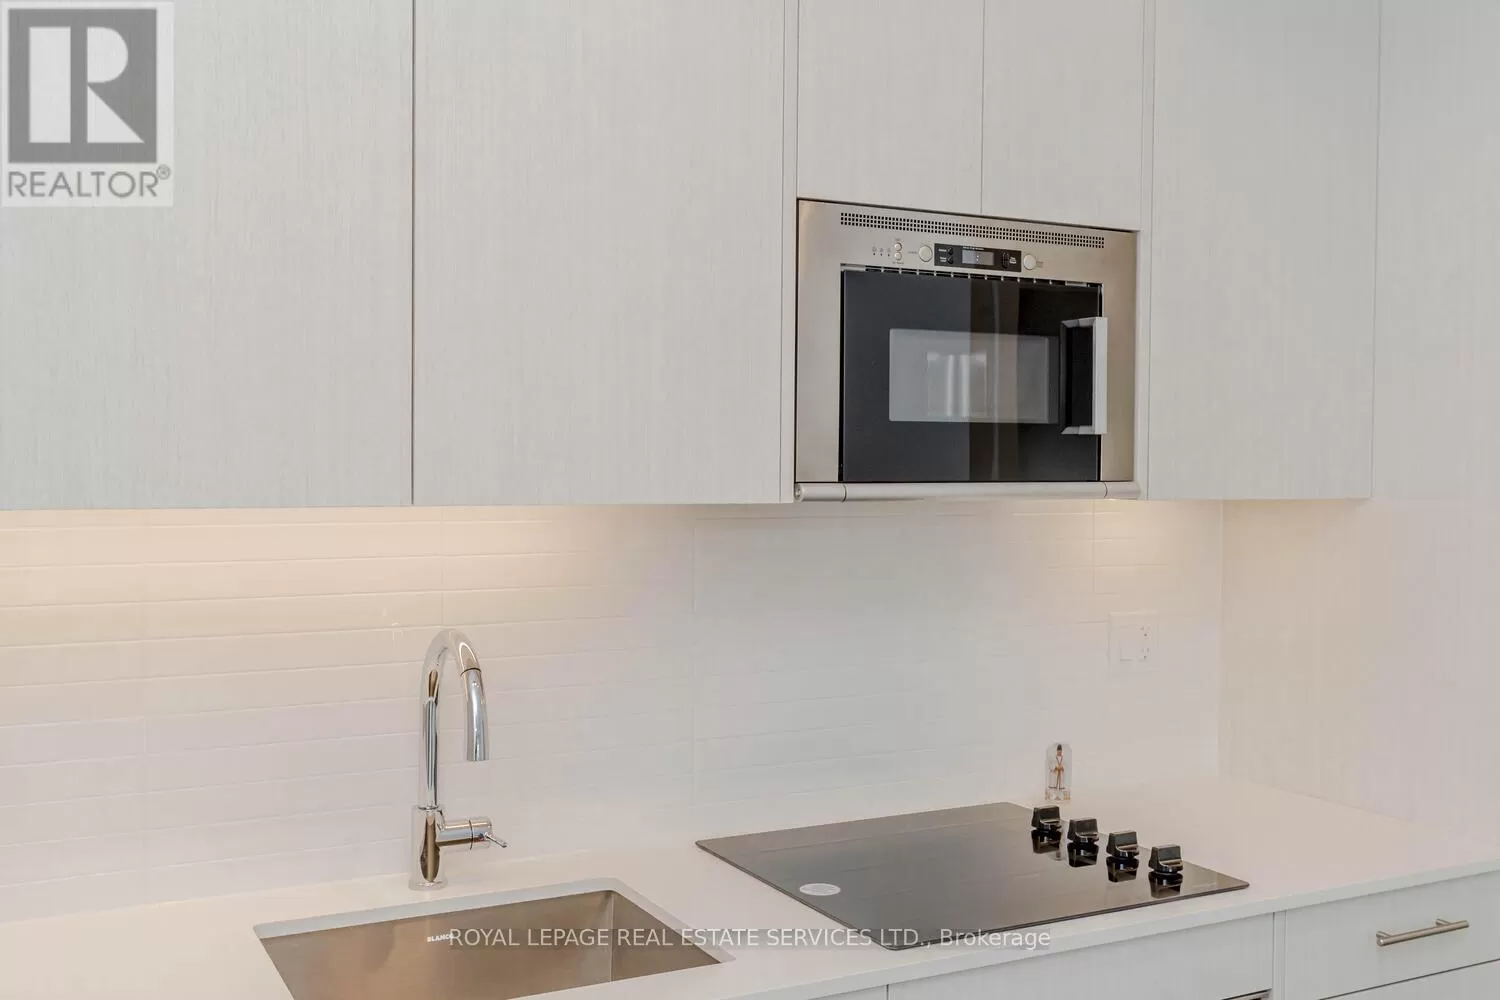 Apartment for rent: 2604 - 286 Main Street, Toronto, Ontario M4C 0B3